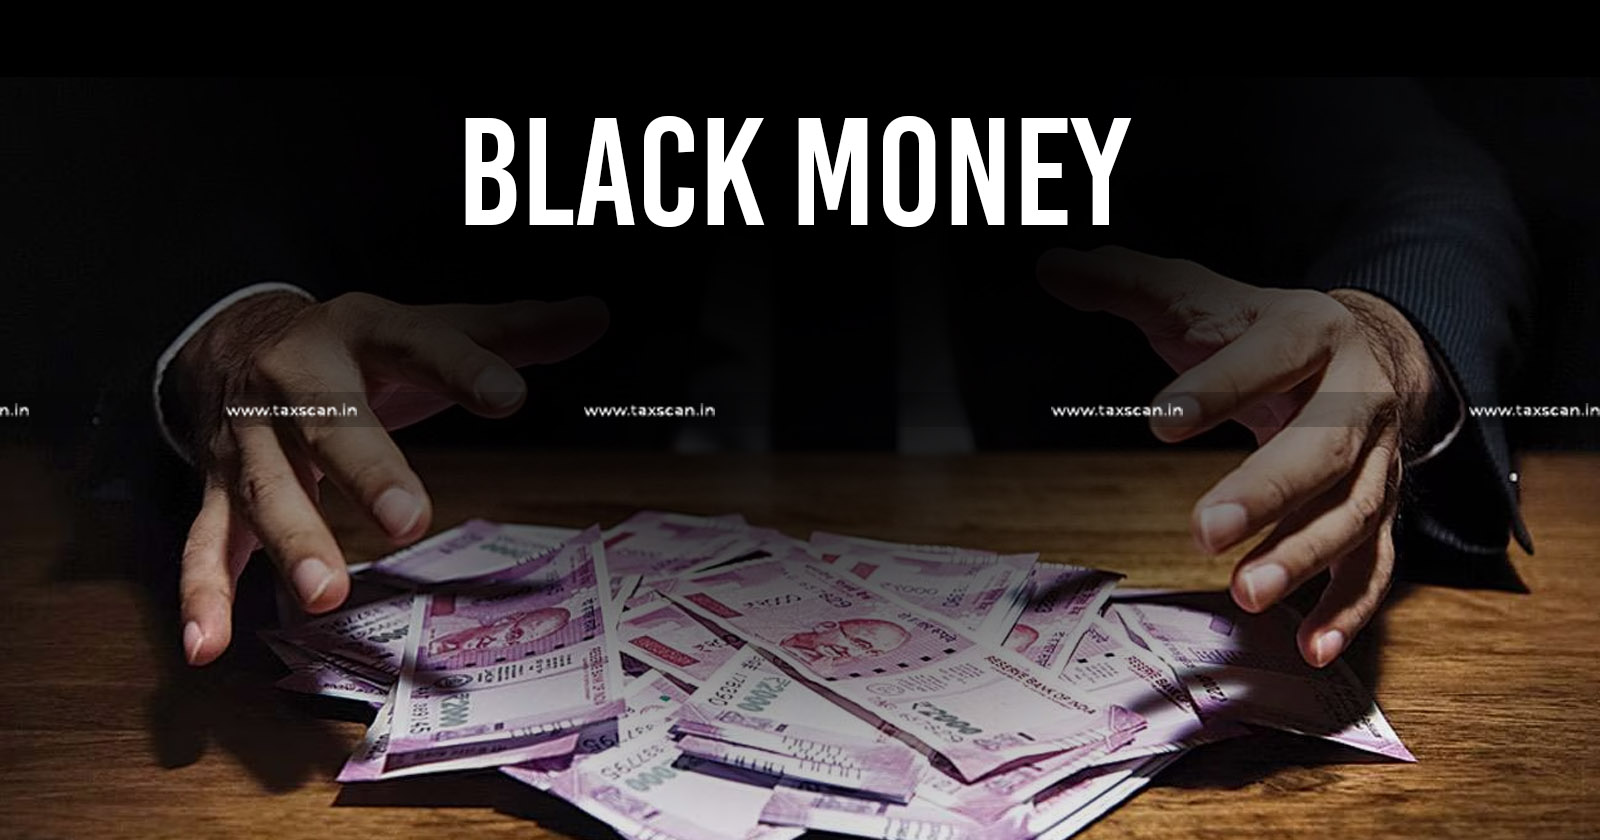 Seizure of Cash by GST Authorities - Seizure of Cash - GST Authorities - Black Money - Delhi High Court - Taxscan